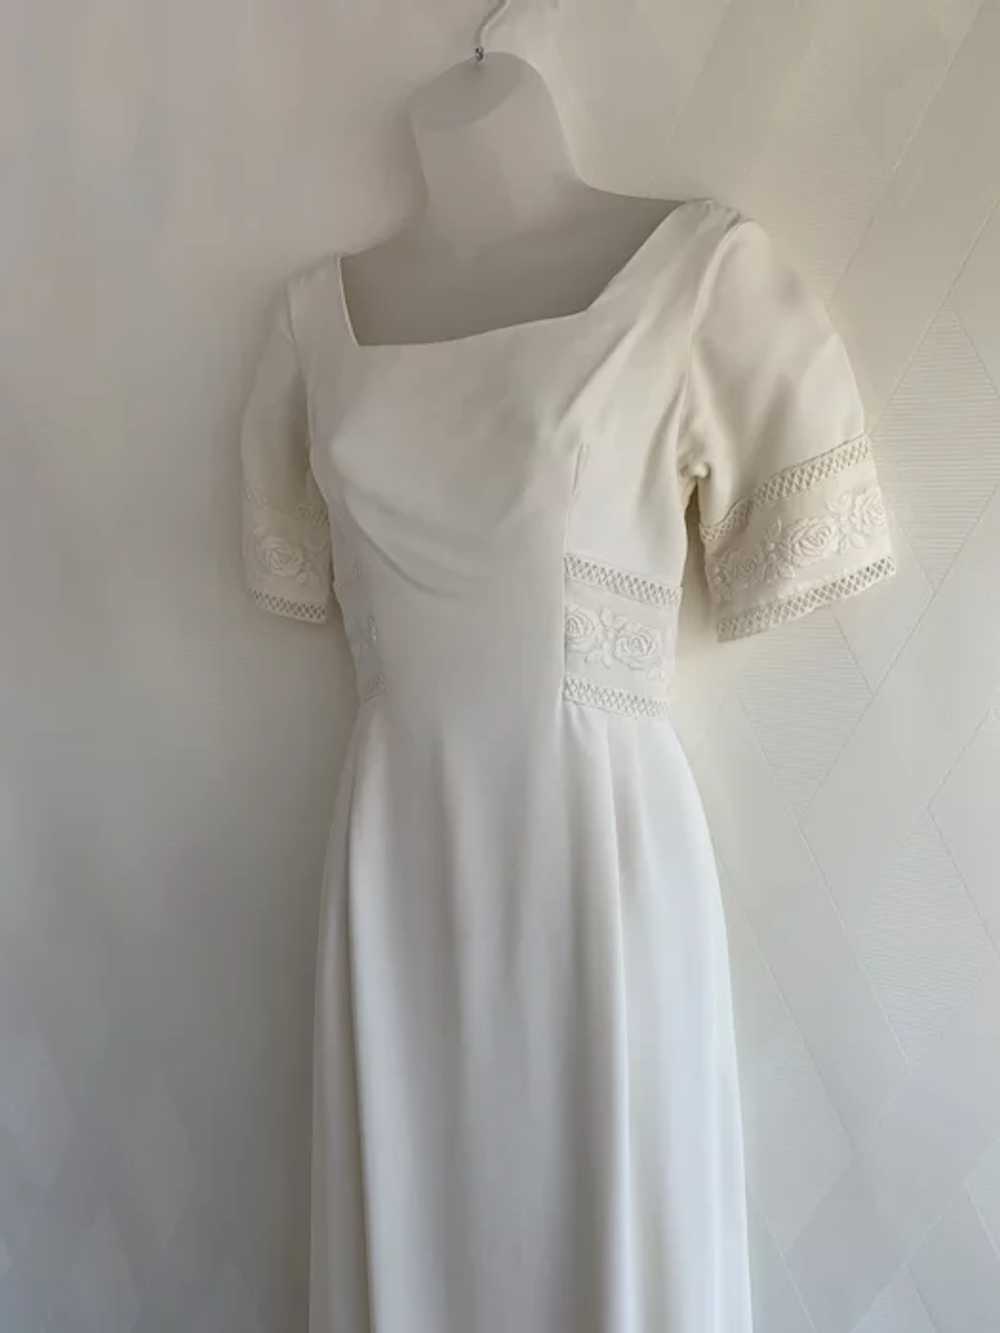 Embroidered Sheath Wedding Dress, Vintage 1960s - image 3